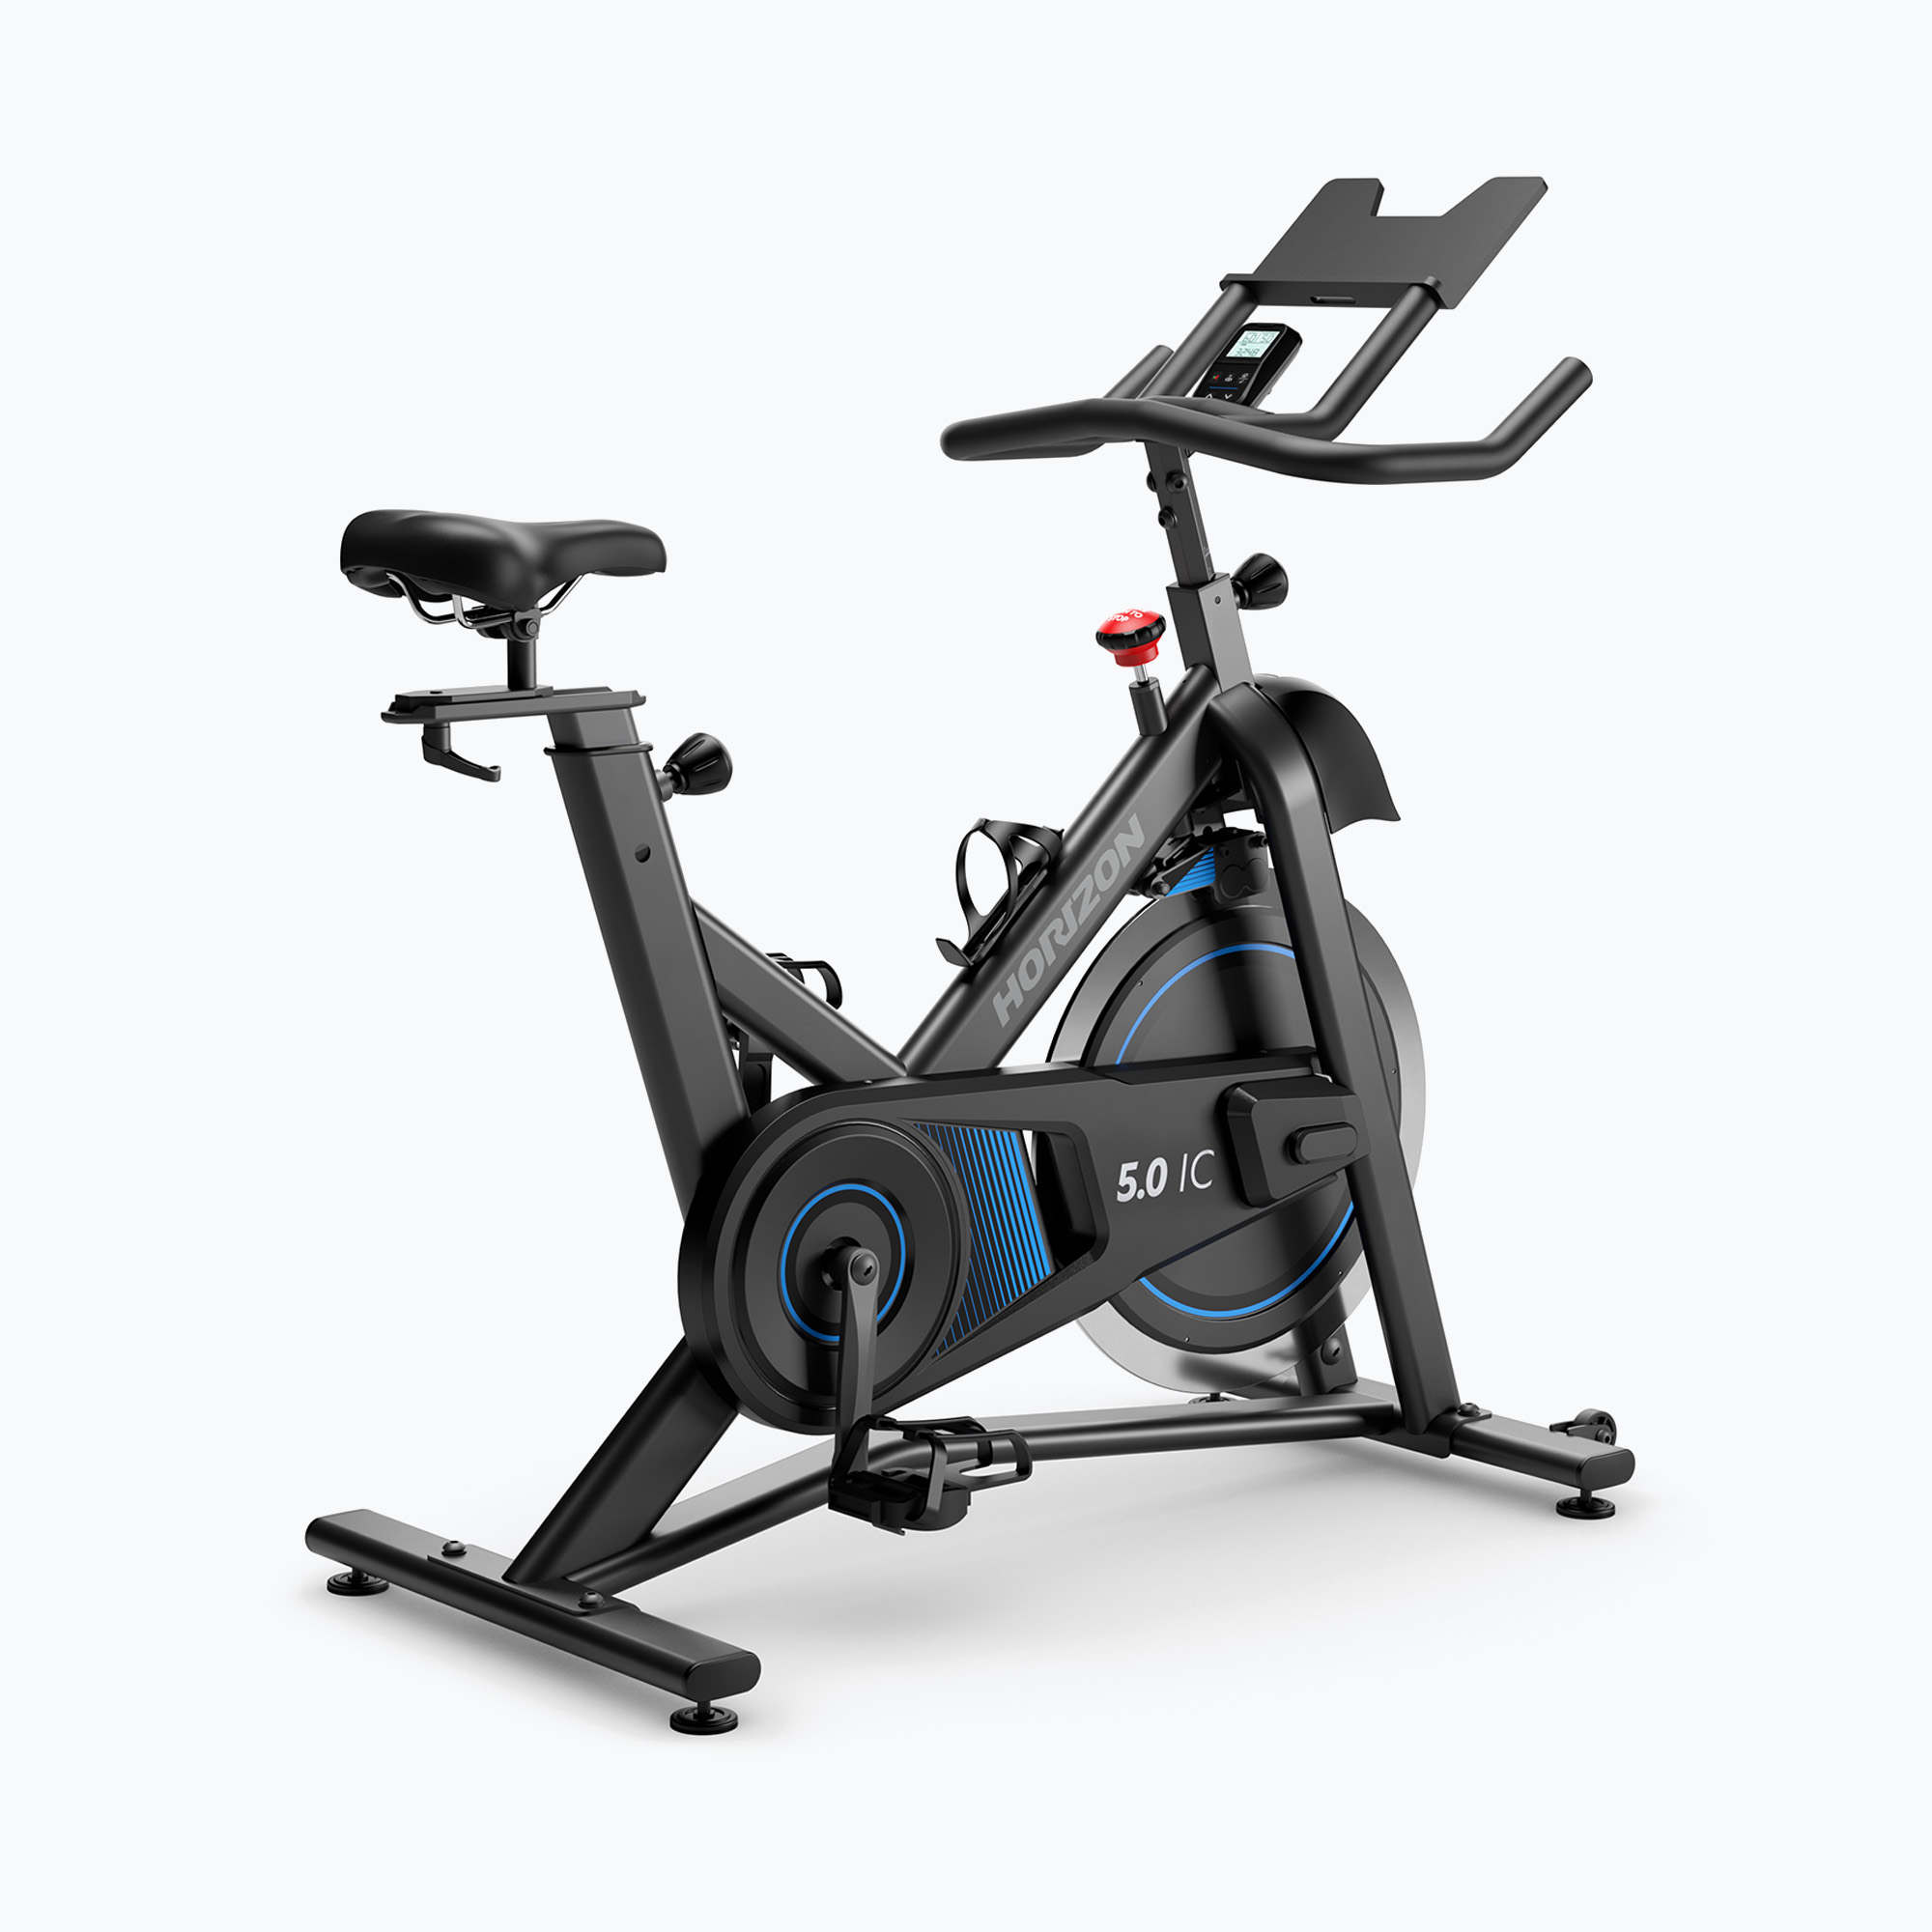 Horizon Fitness Indoor Cycle 5.0 IC spinningový bicykel